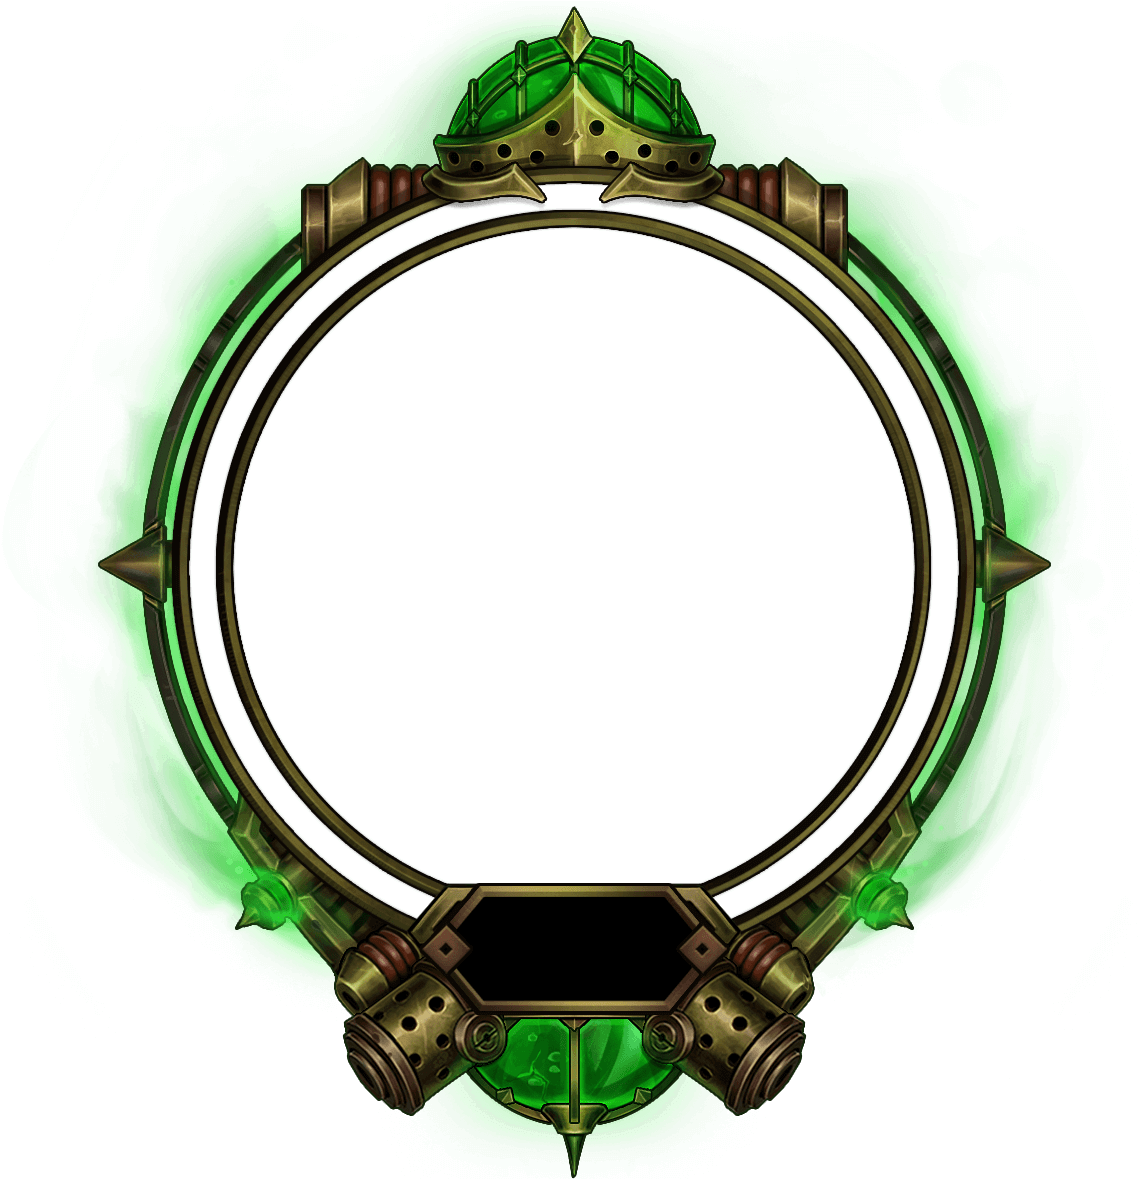 Leagueof Legends Green Circular Frame PNG